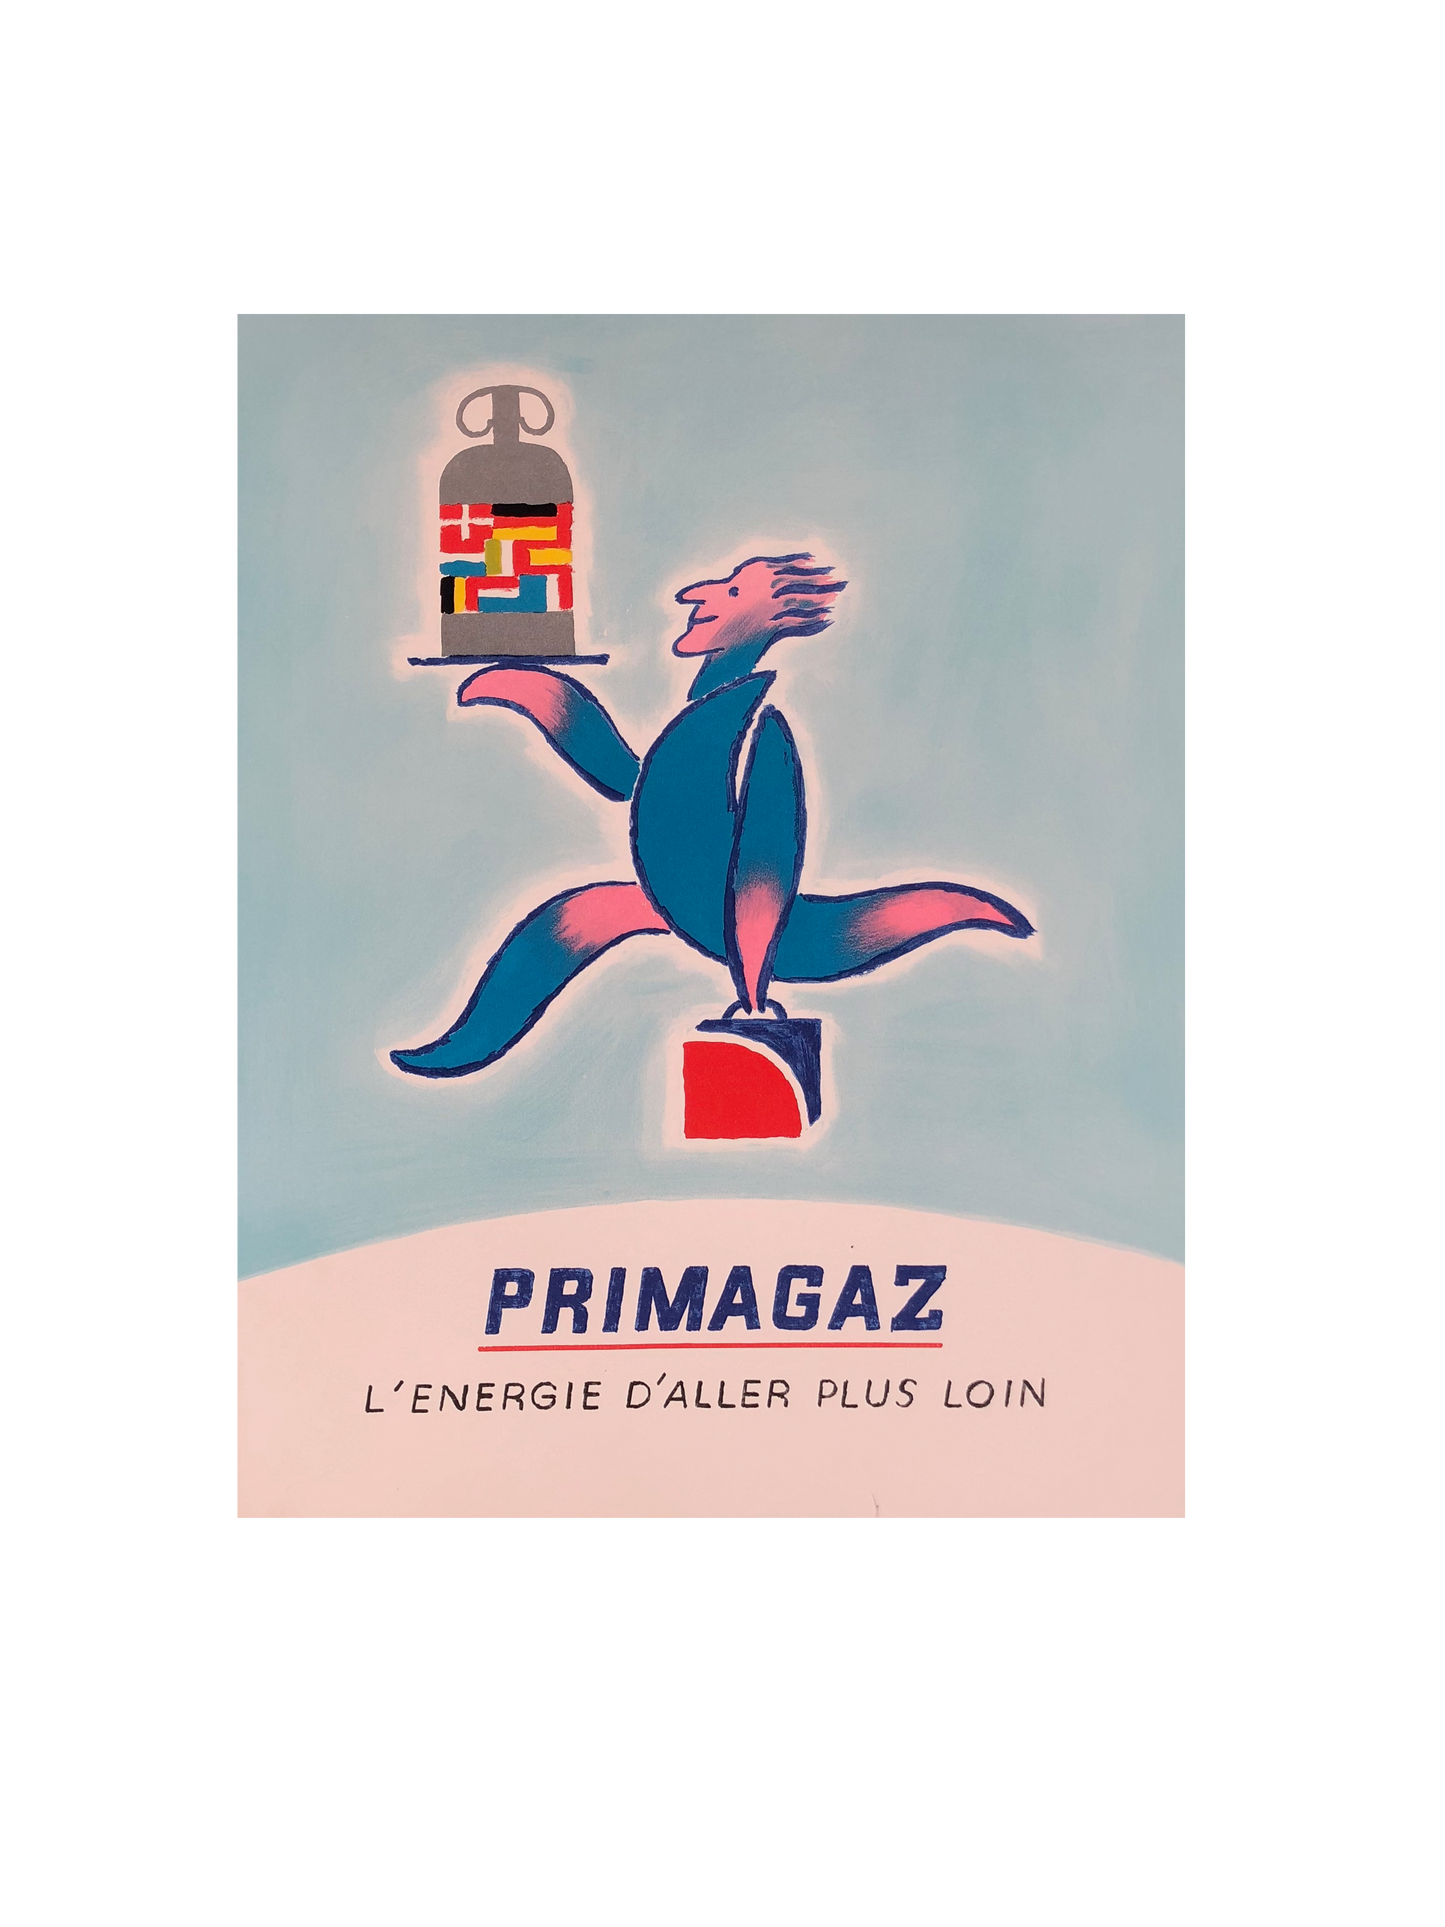 Primagaz by Savignac